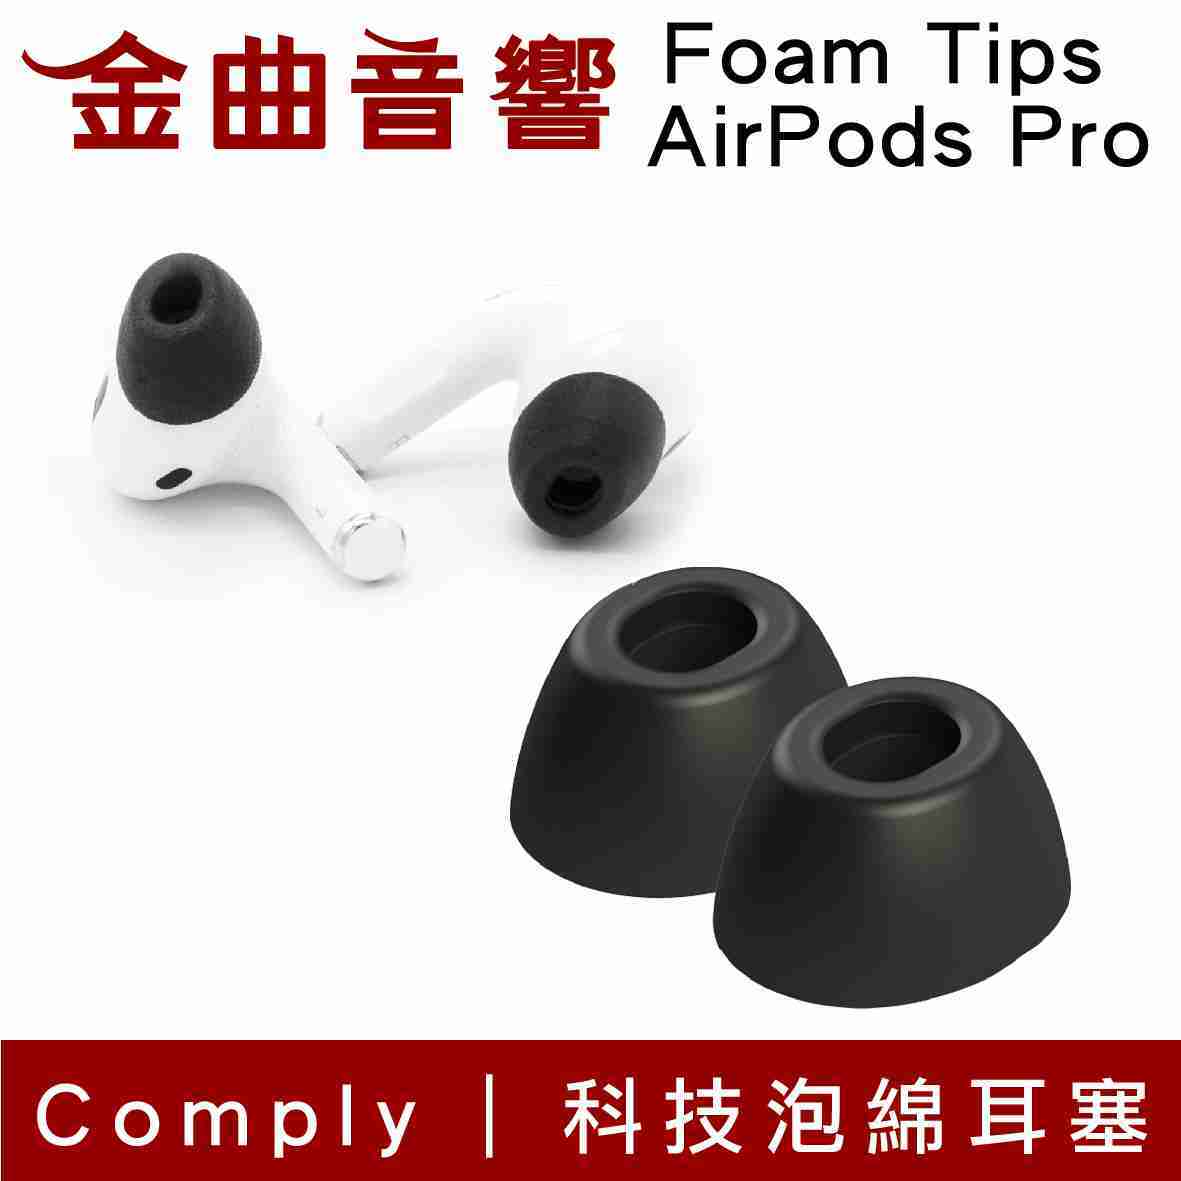 Comply Foam Tips AirPods Pro 專用 科技泡綿 耳塞 | 金曲音響